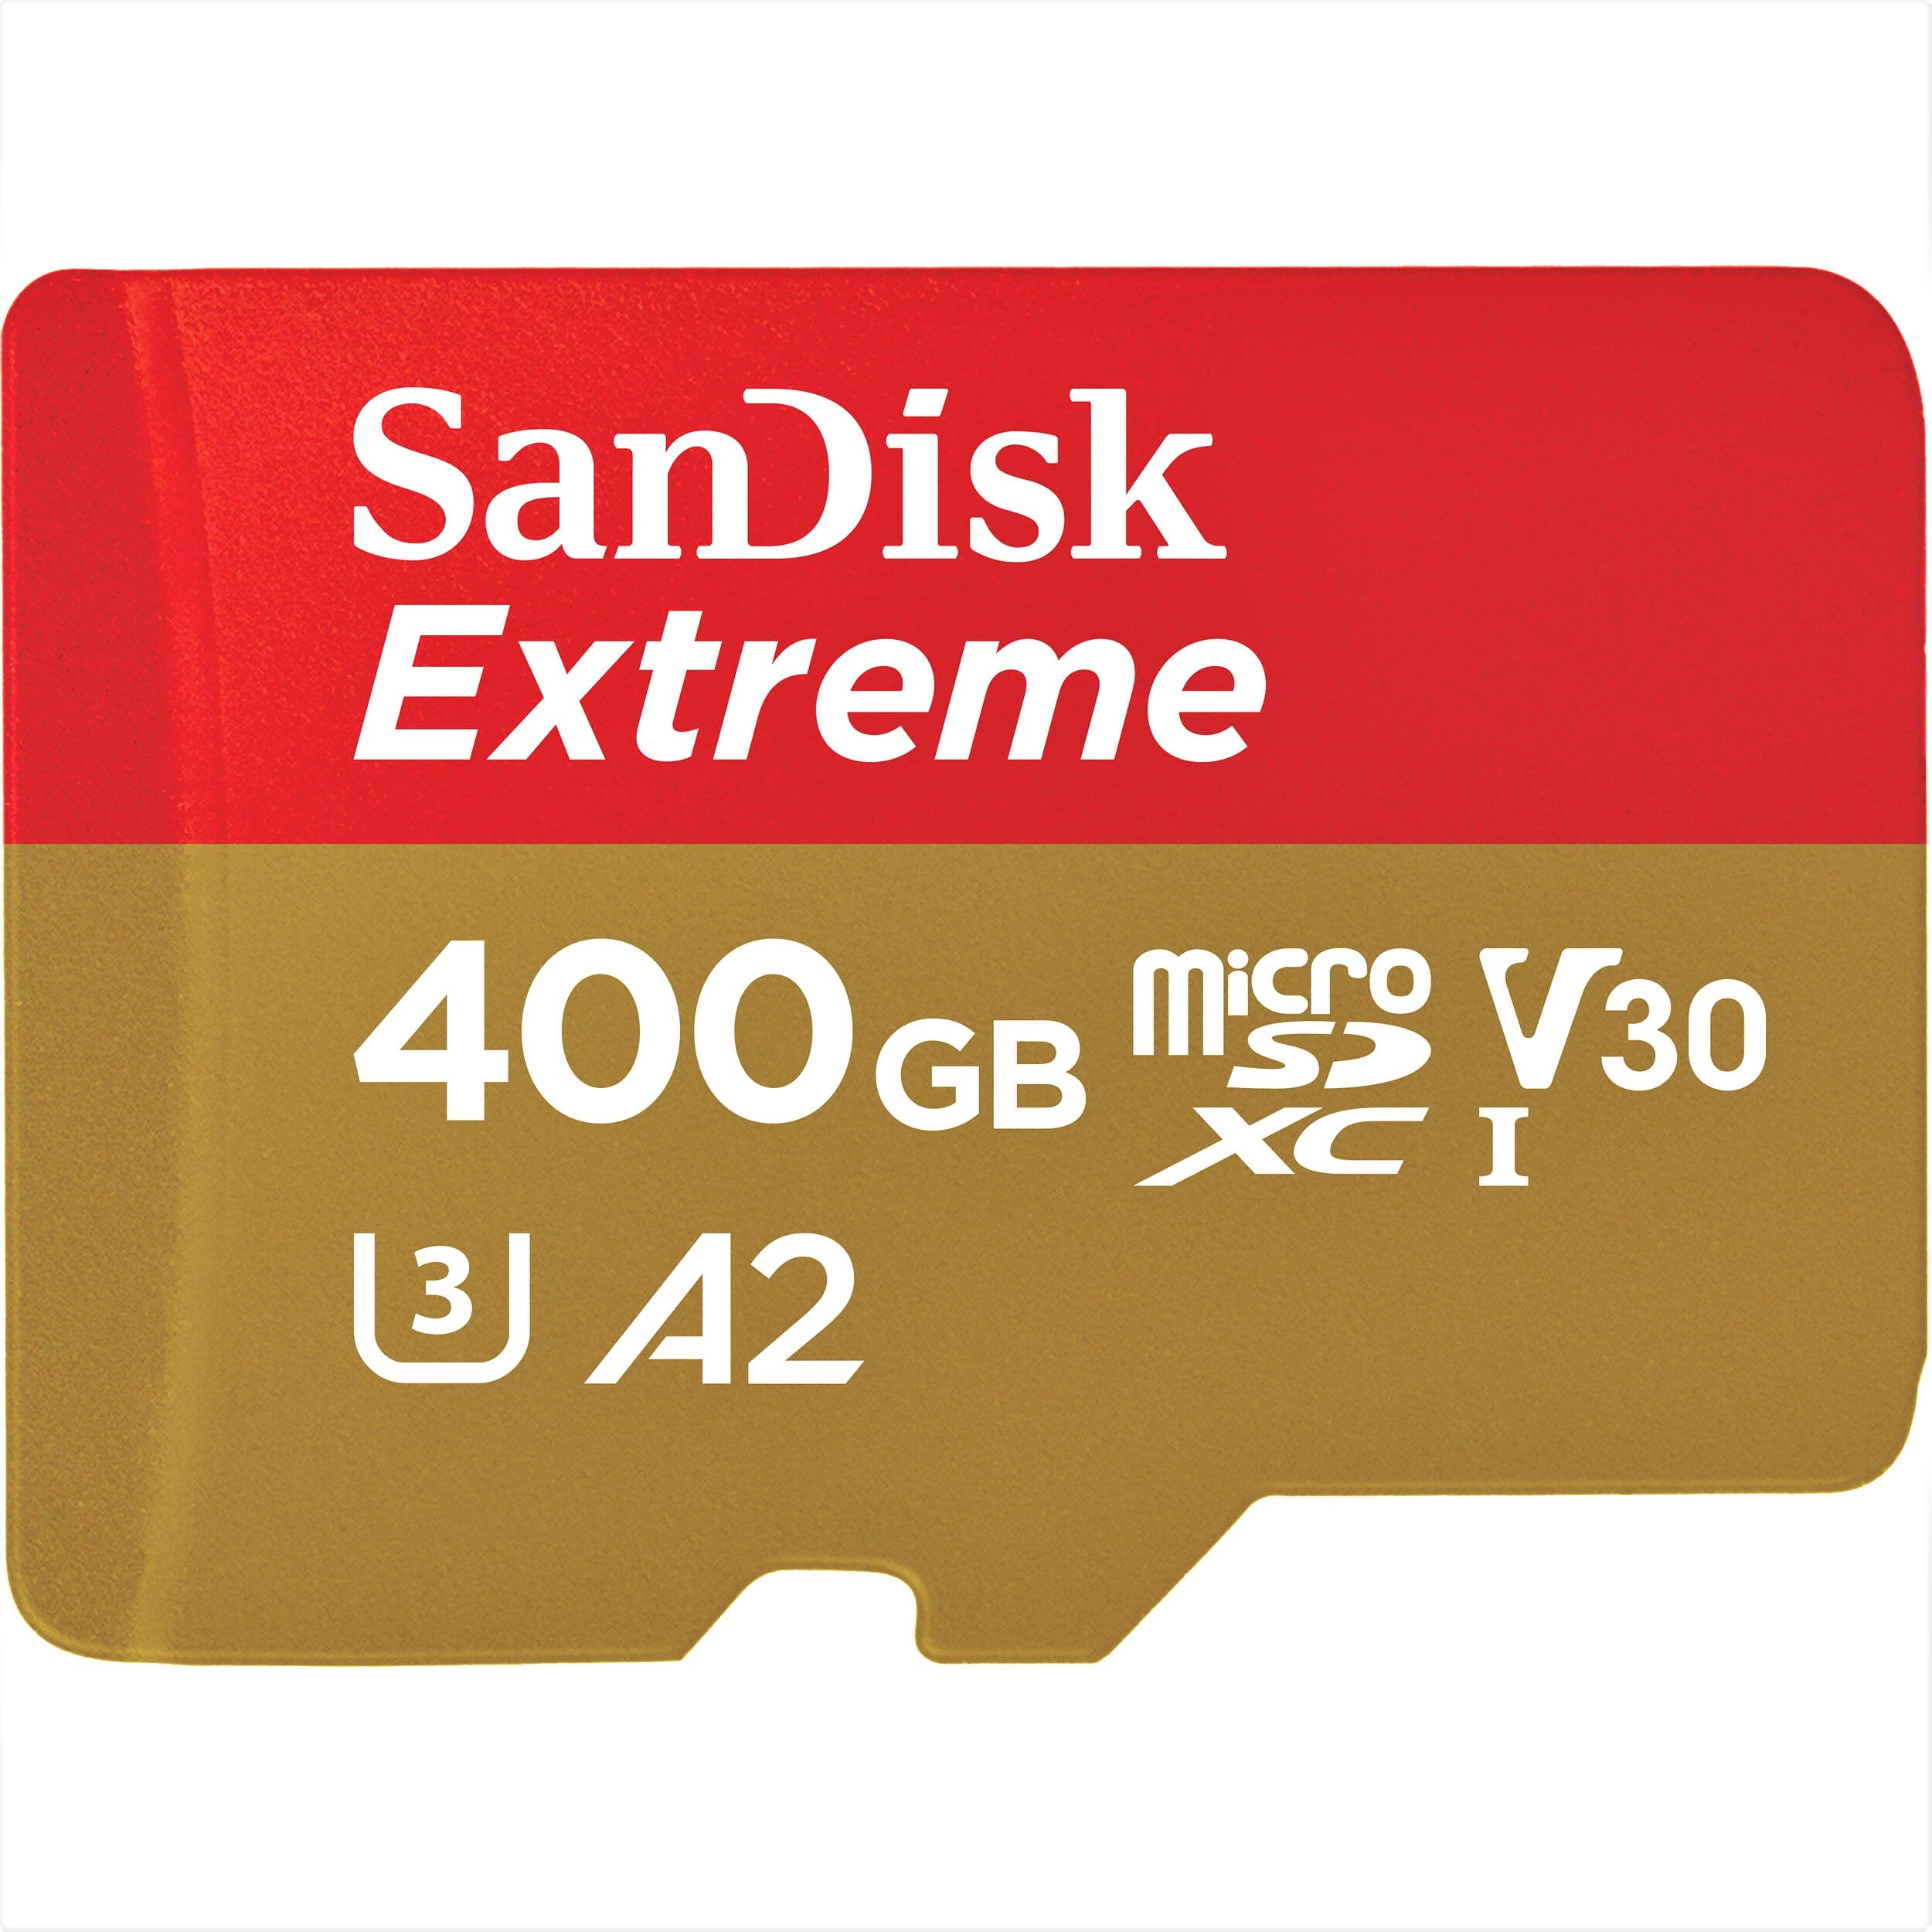 SanDisk 400GB Extreme UHS-I microSDXC Memory Card